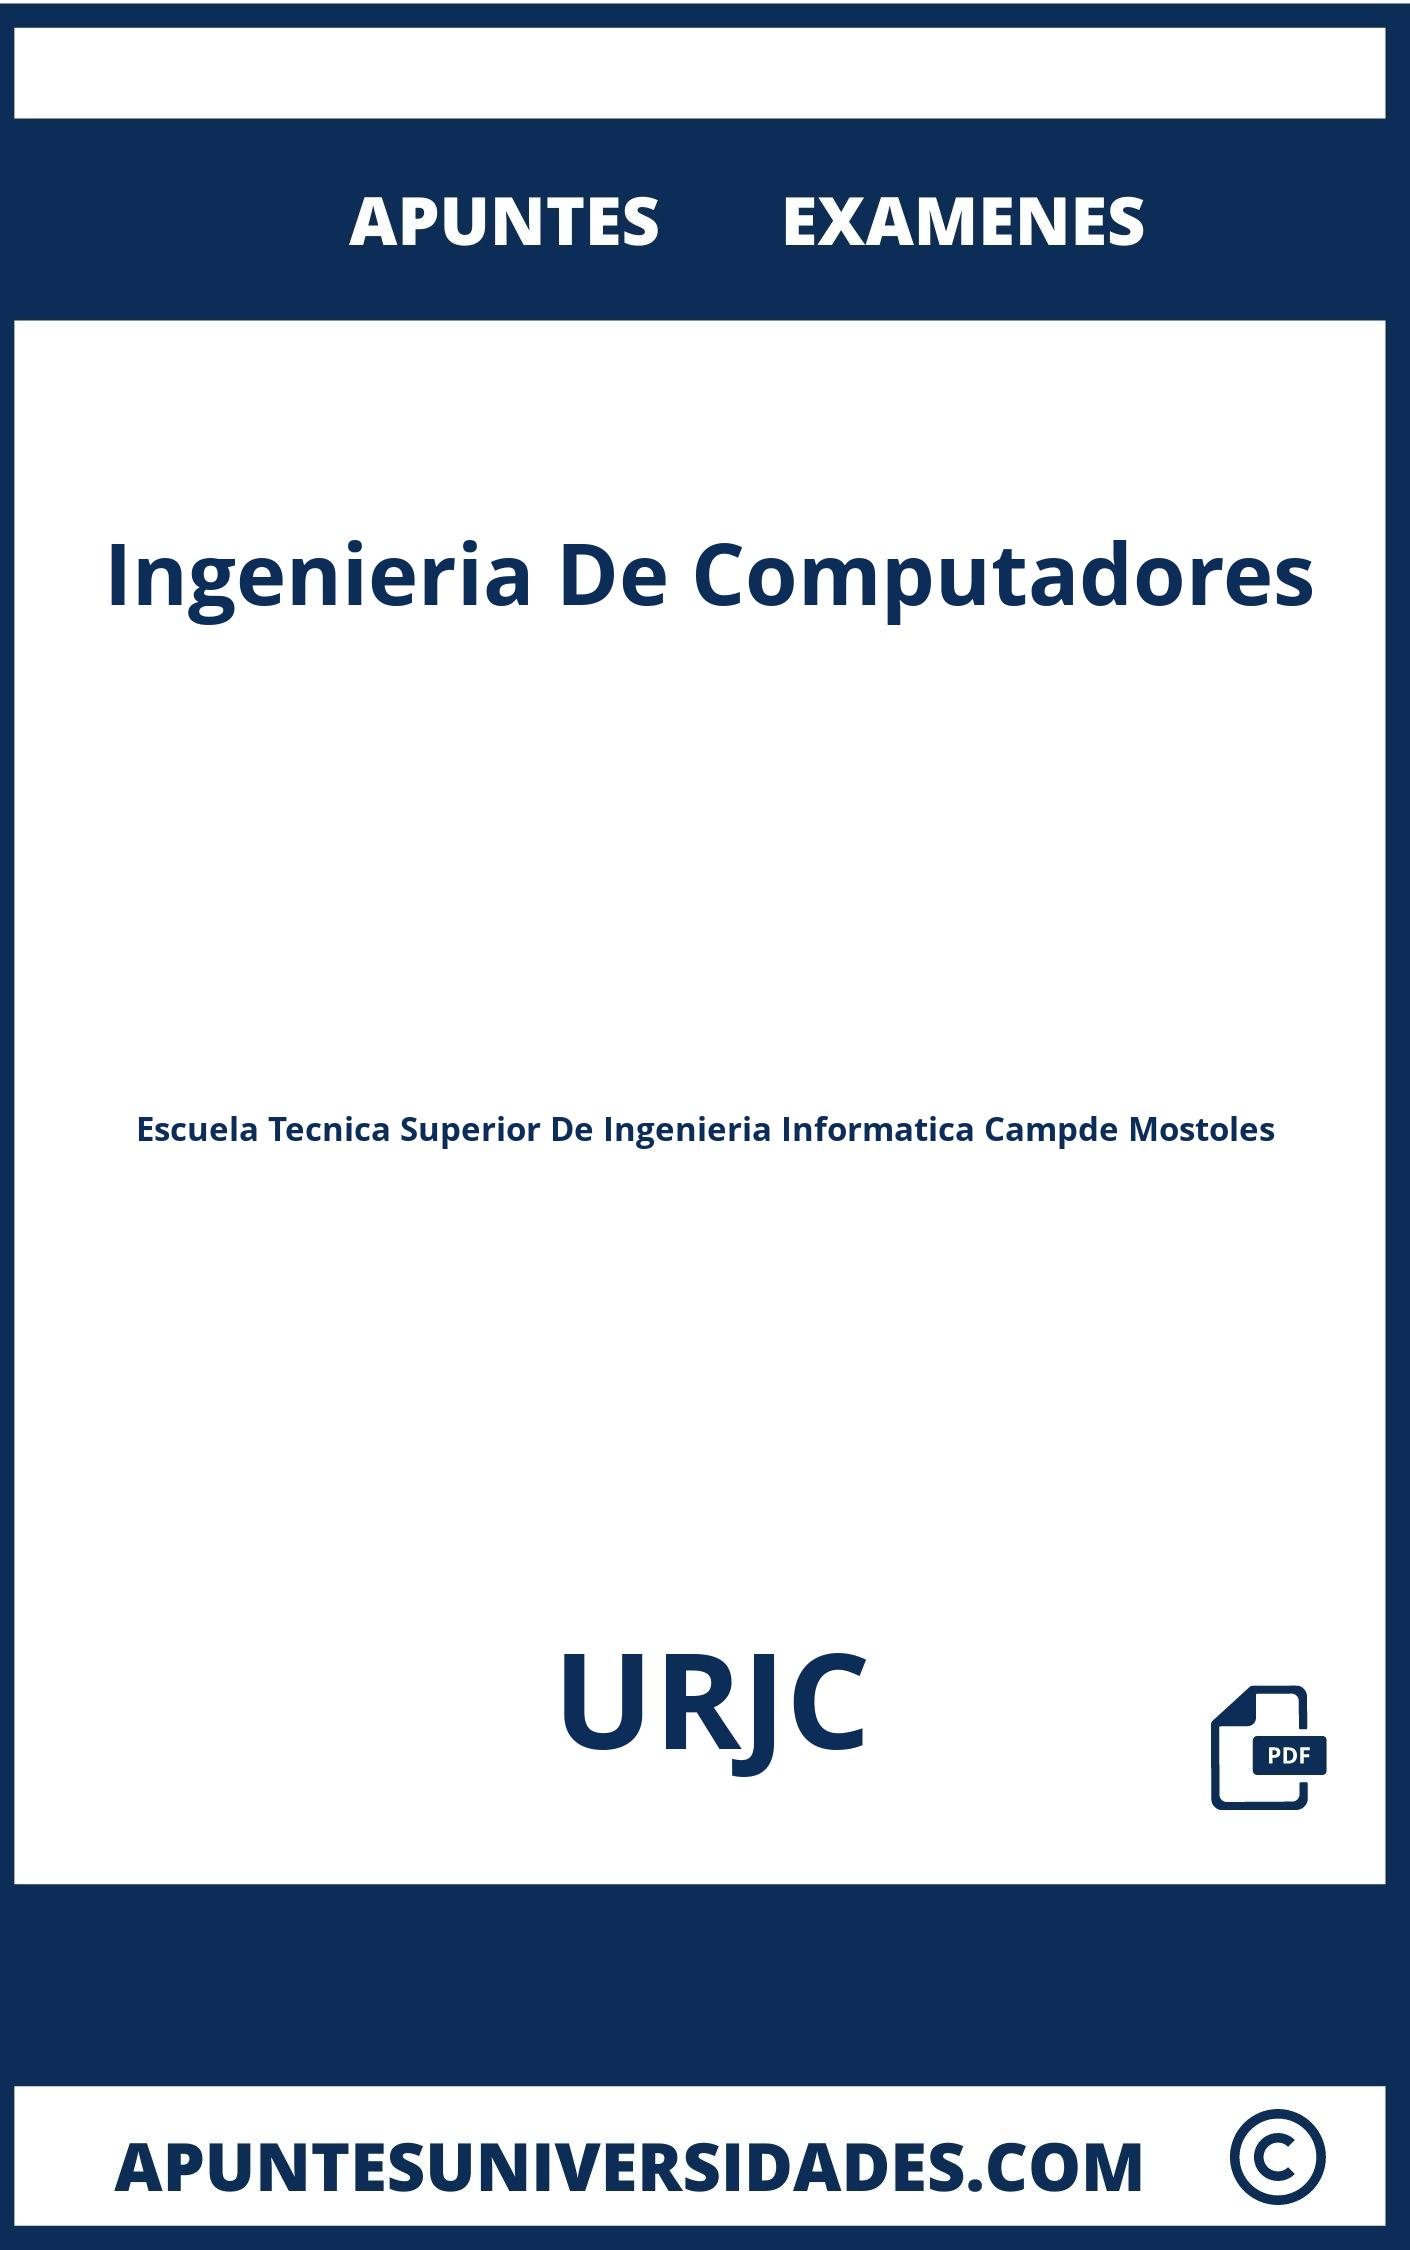 Ingenieria De Computadores URJC Apuntes Examenes